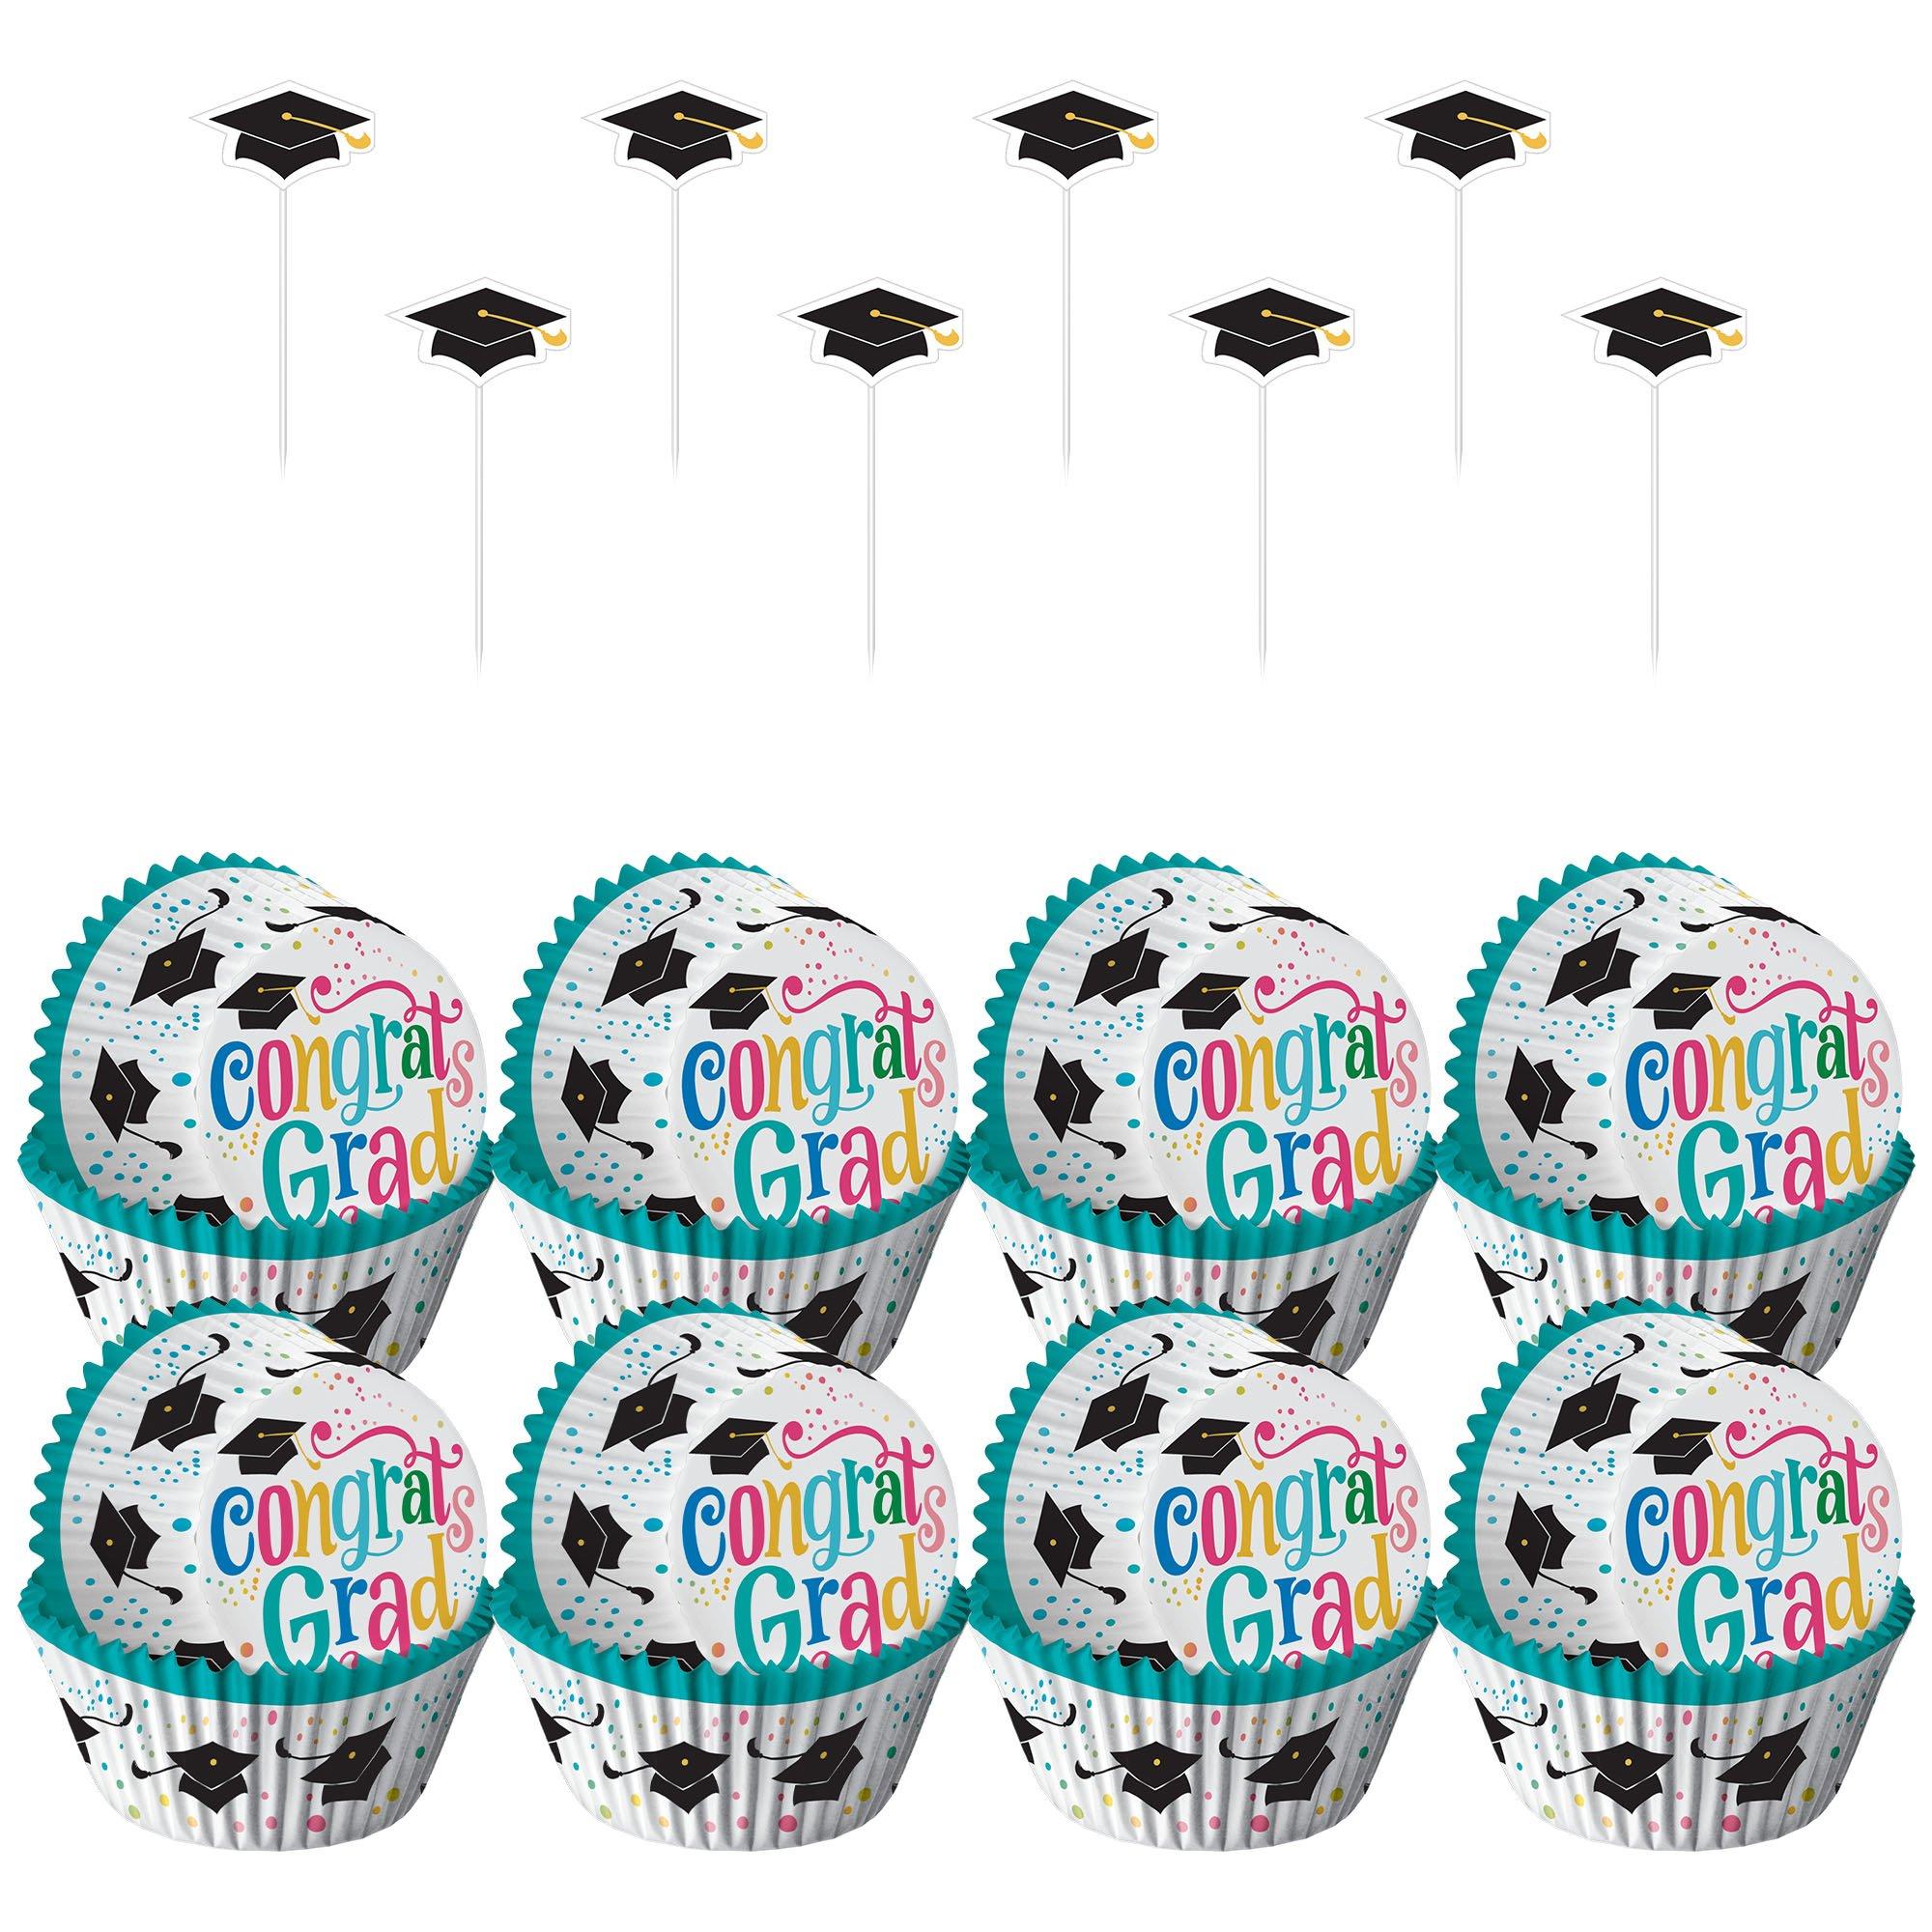 Follow Your Dreams Graduation Paper & Plastic Cupcake Decorating Kit for 24